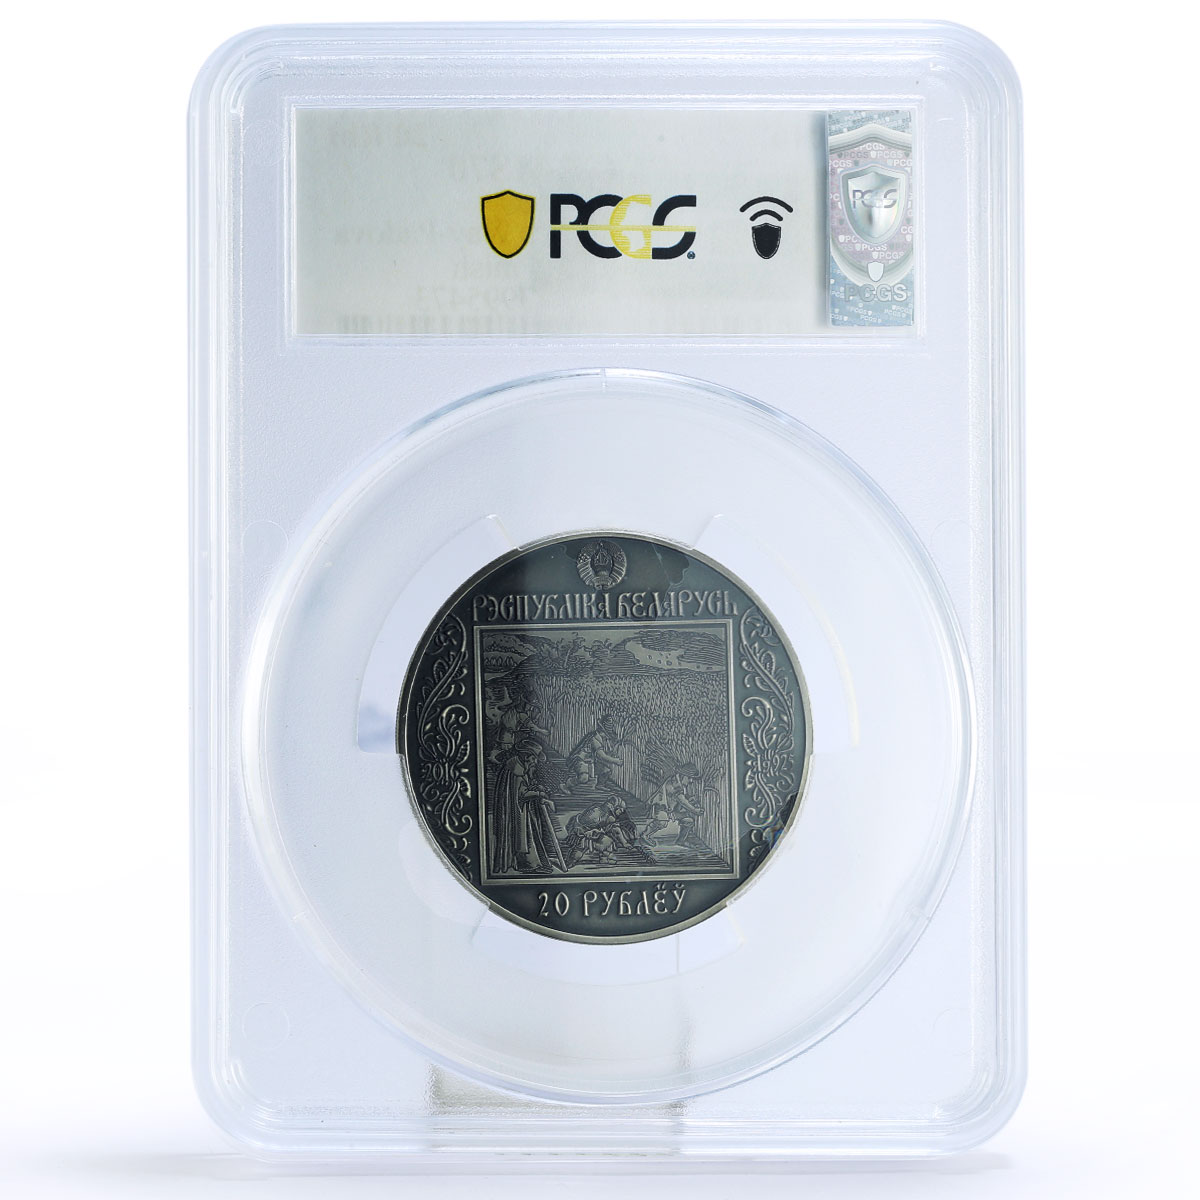 Belarus 20 rubles Francisk Skorinas Way Padova Italy MS70 PCGS silver coin 2016